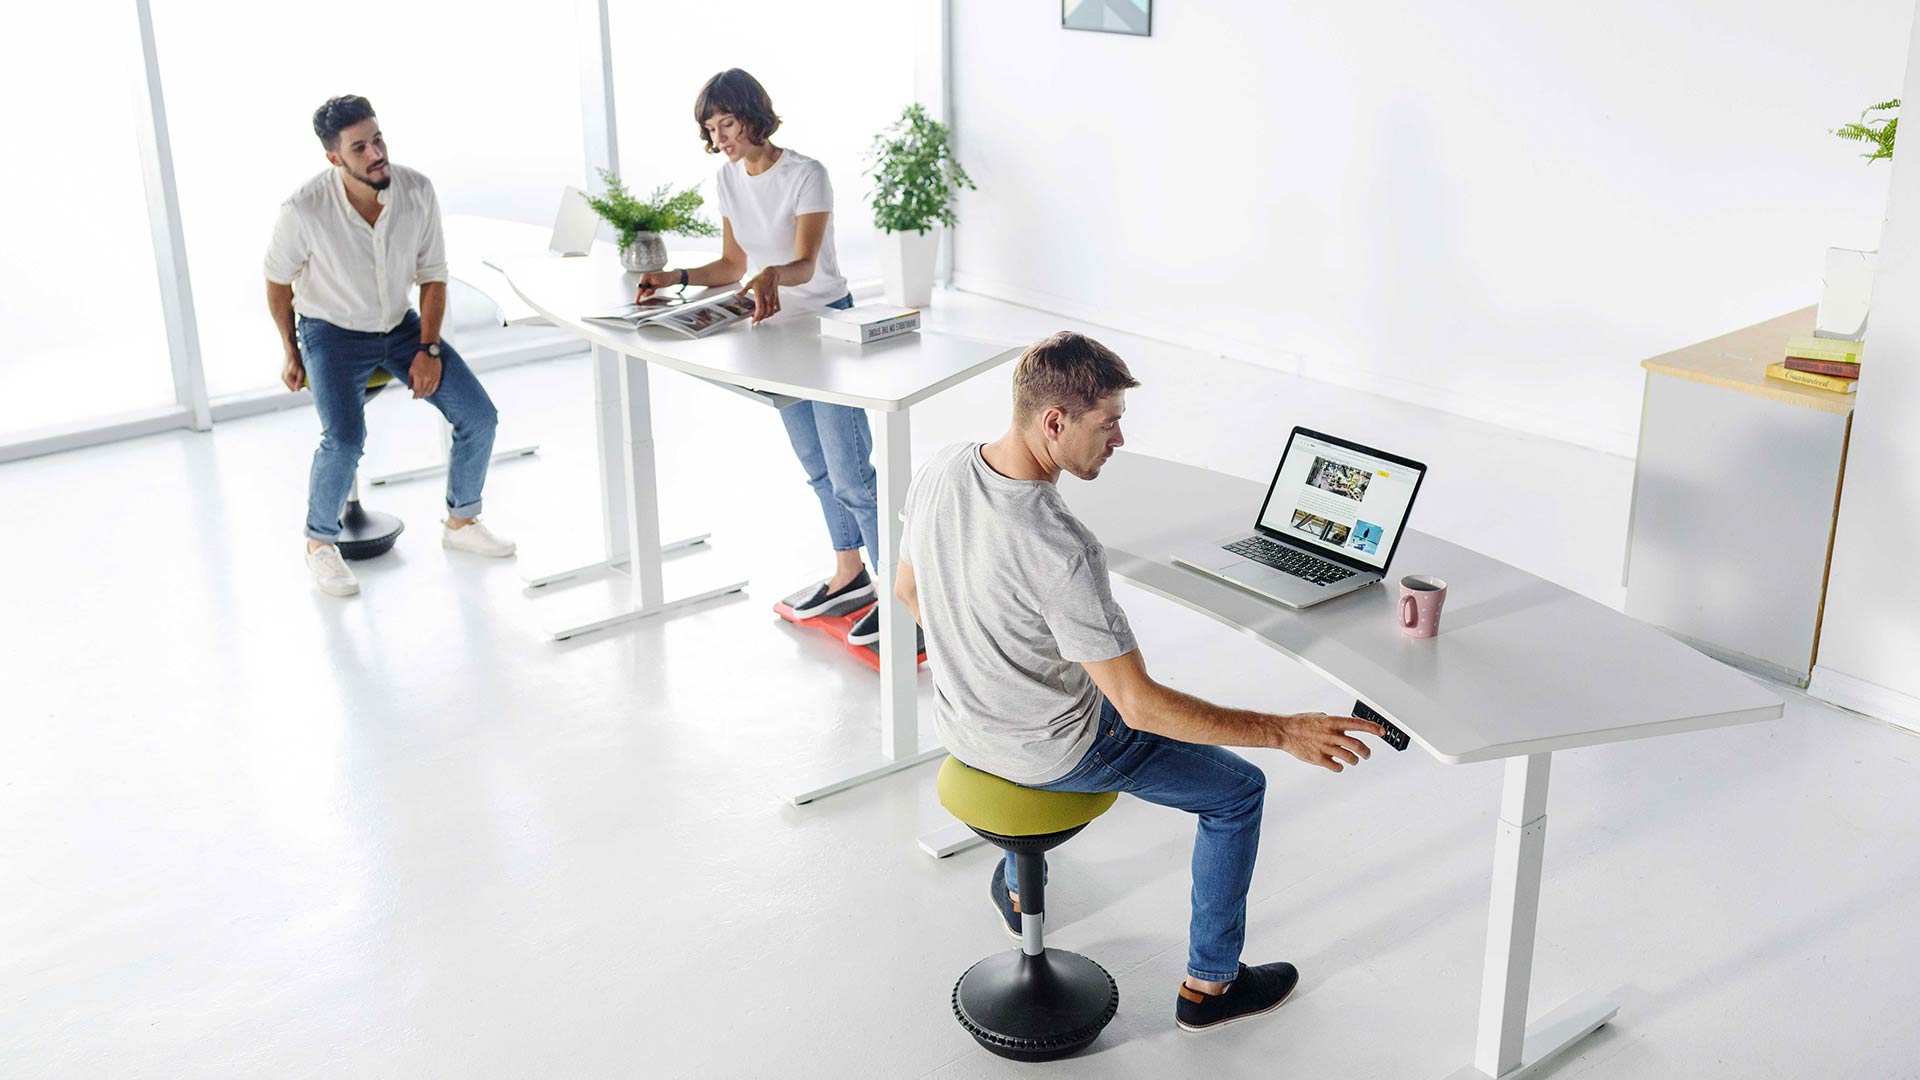 Modern office furniture featuring adjustable ergonomic active sitting stools.